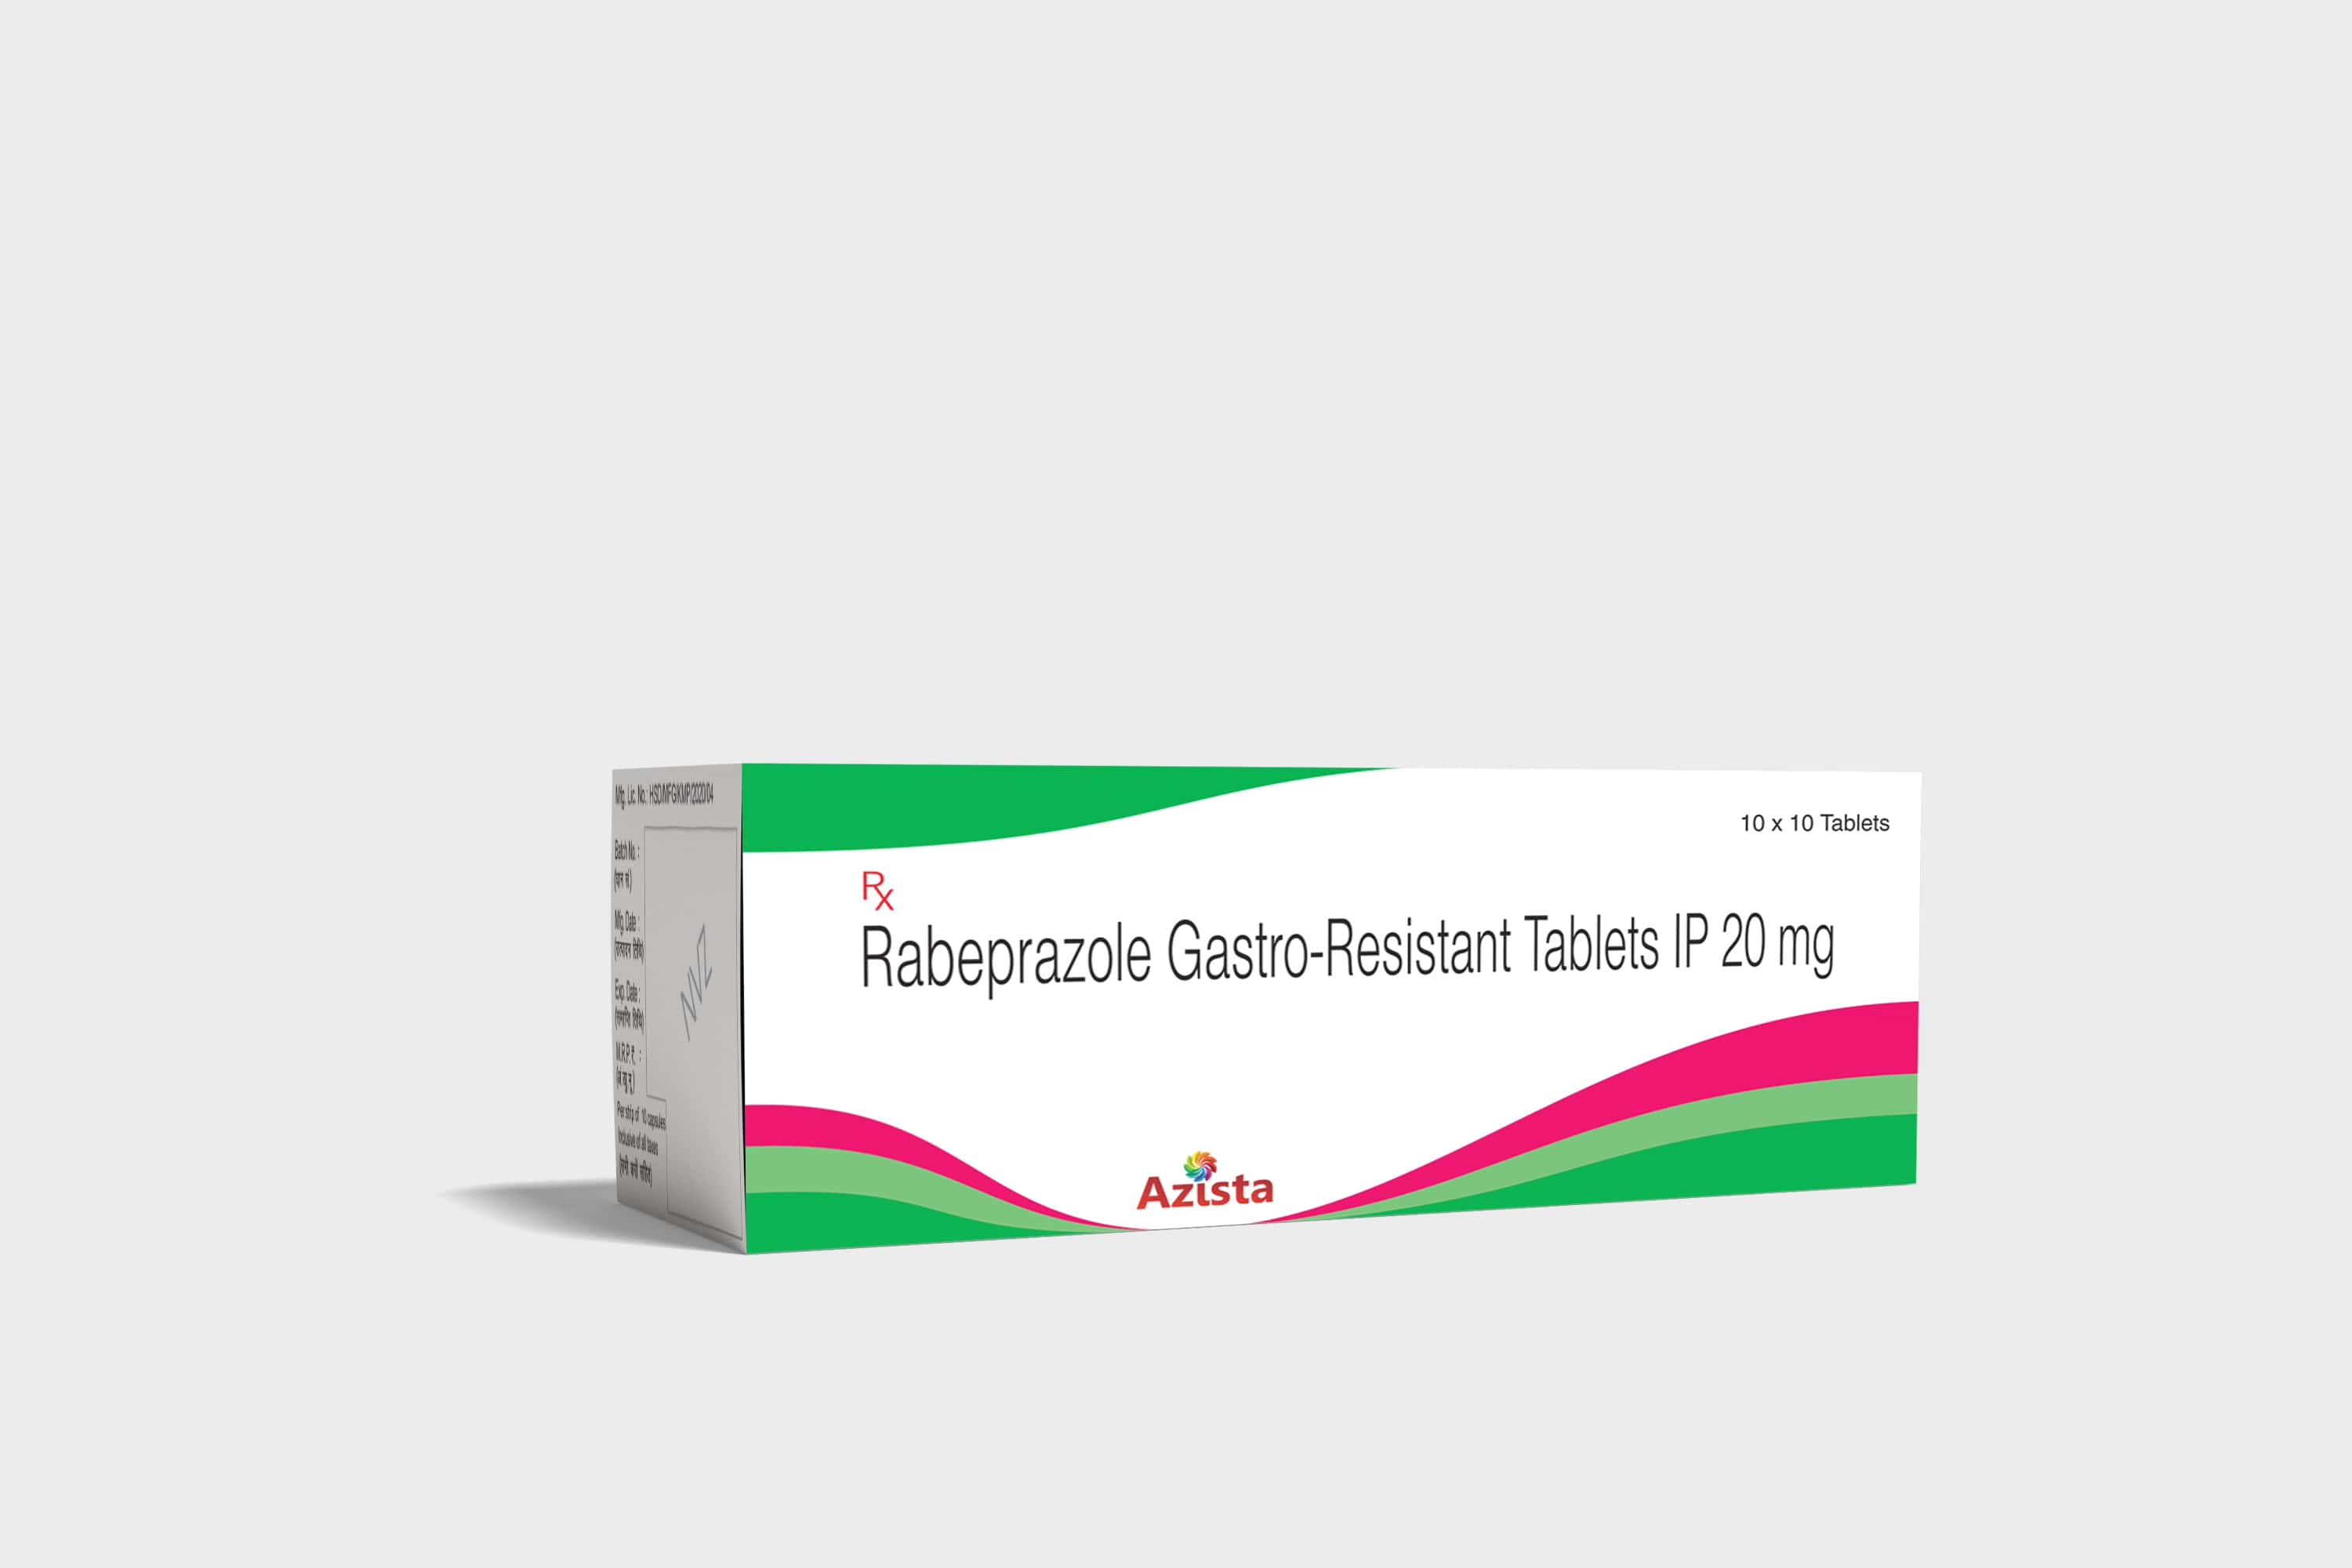 Rabeprazole Gastro-resistant Tablets IP 20mg